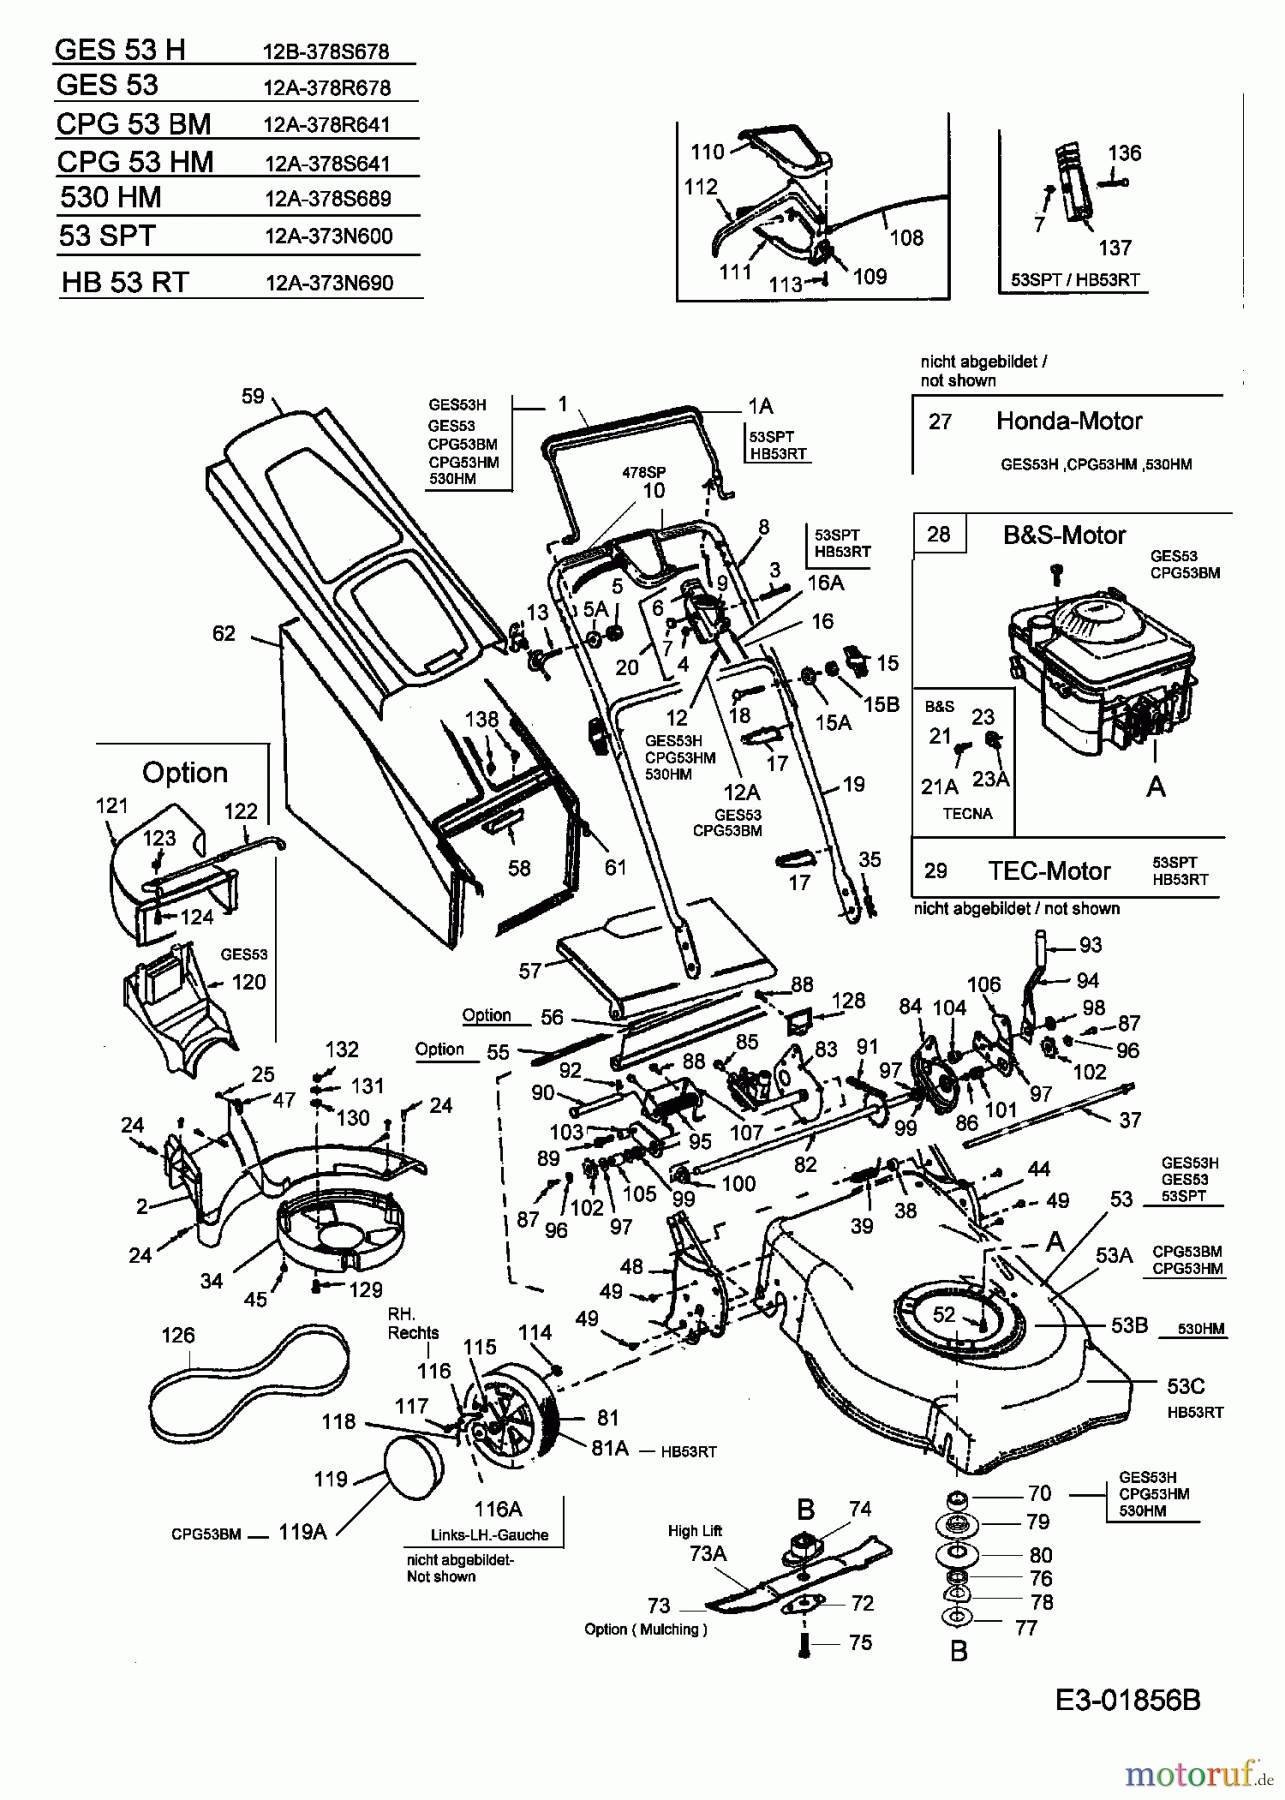  Central Park Motormäher mit Antrieb CPG 53 BM 12A-378R641  (2004) Grundgerät